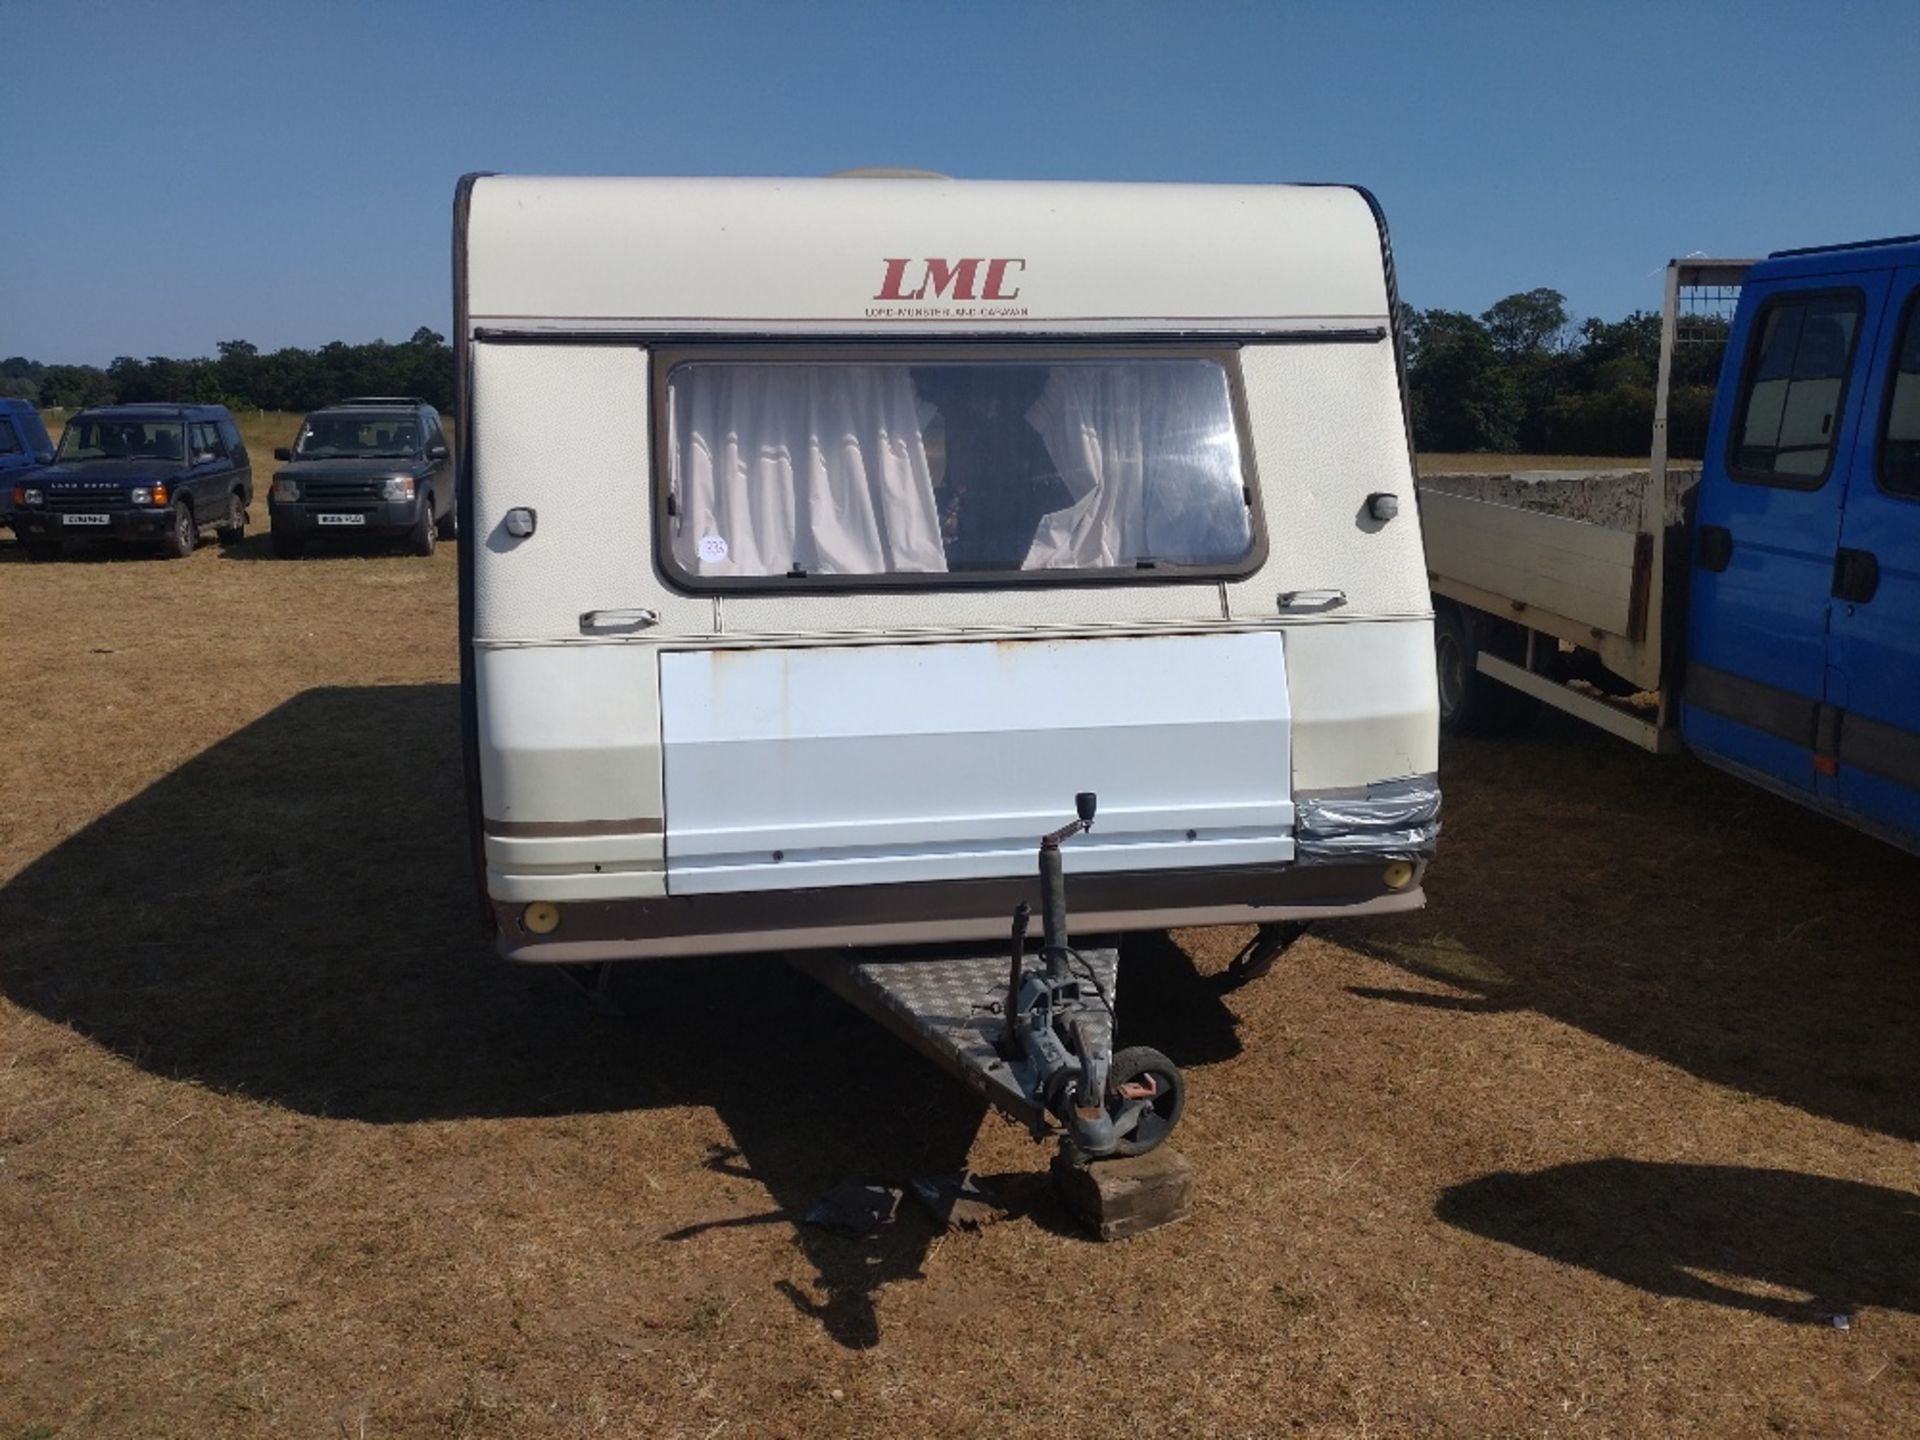 LMC Caravan - Image 3 of 7